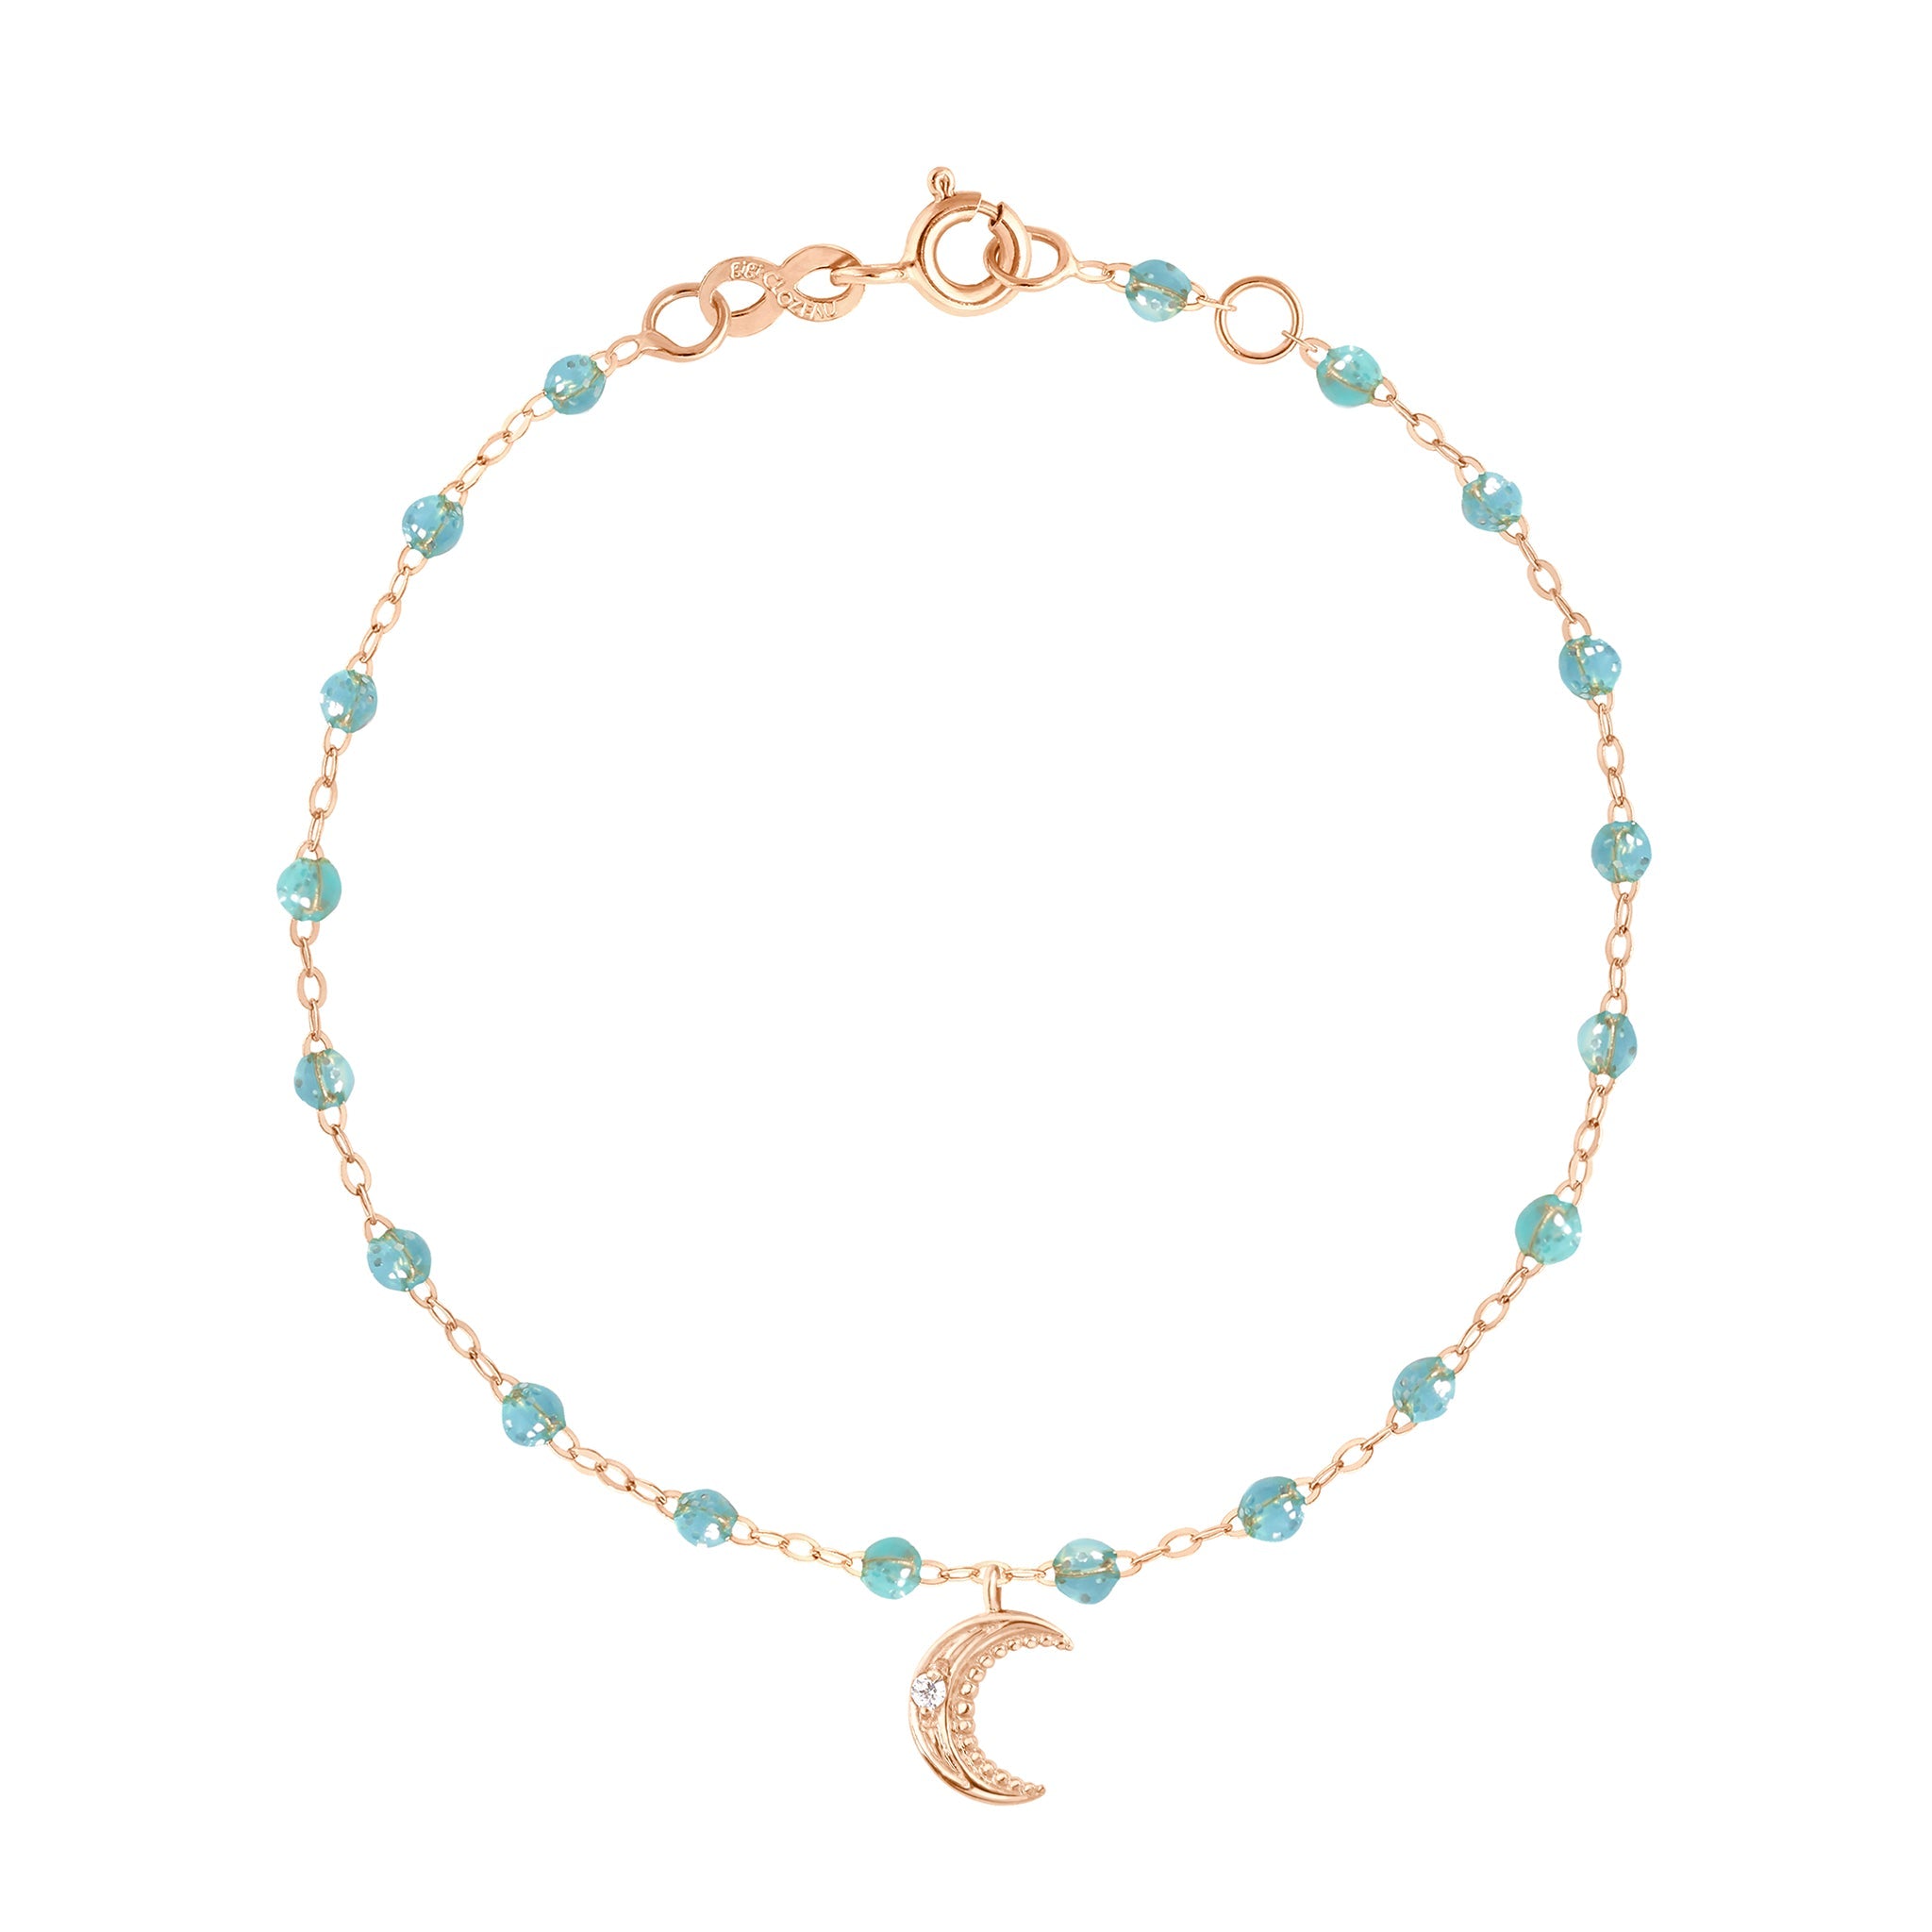 Bracelet aqua Lune, diamants, or rose, 17 cm pirate Référence :  b3lu001r6217di -1